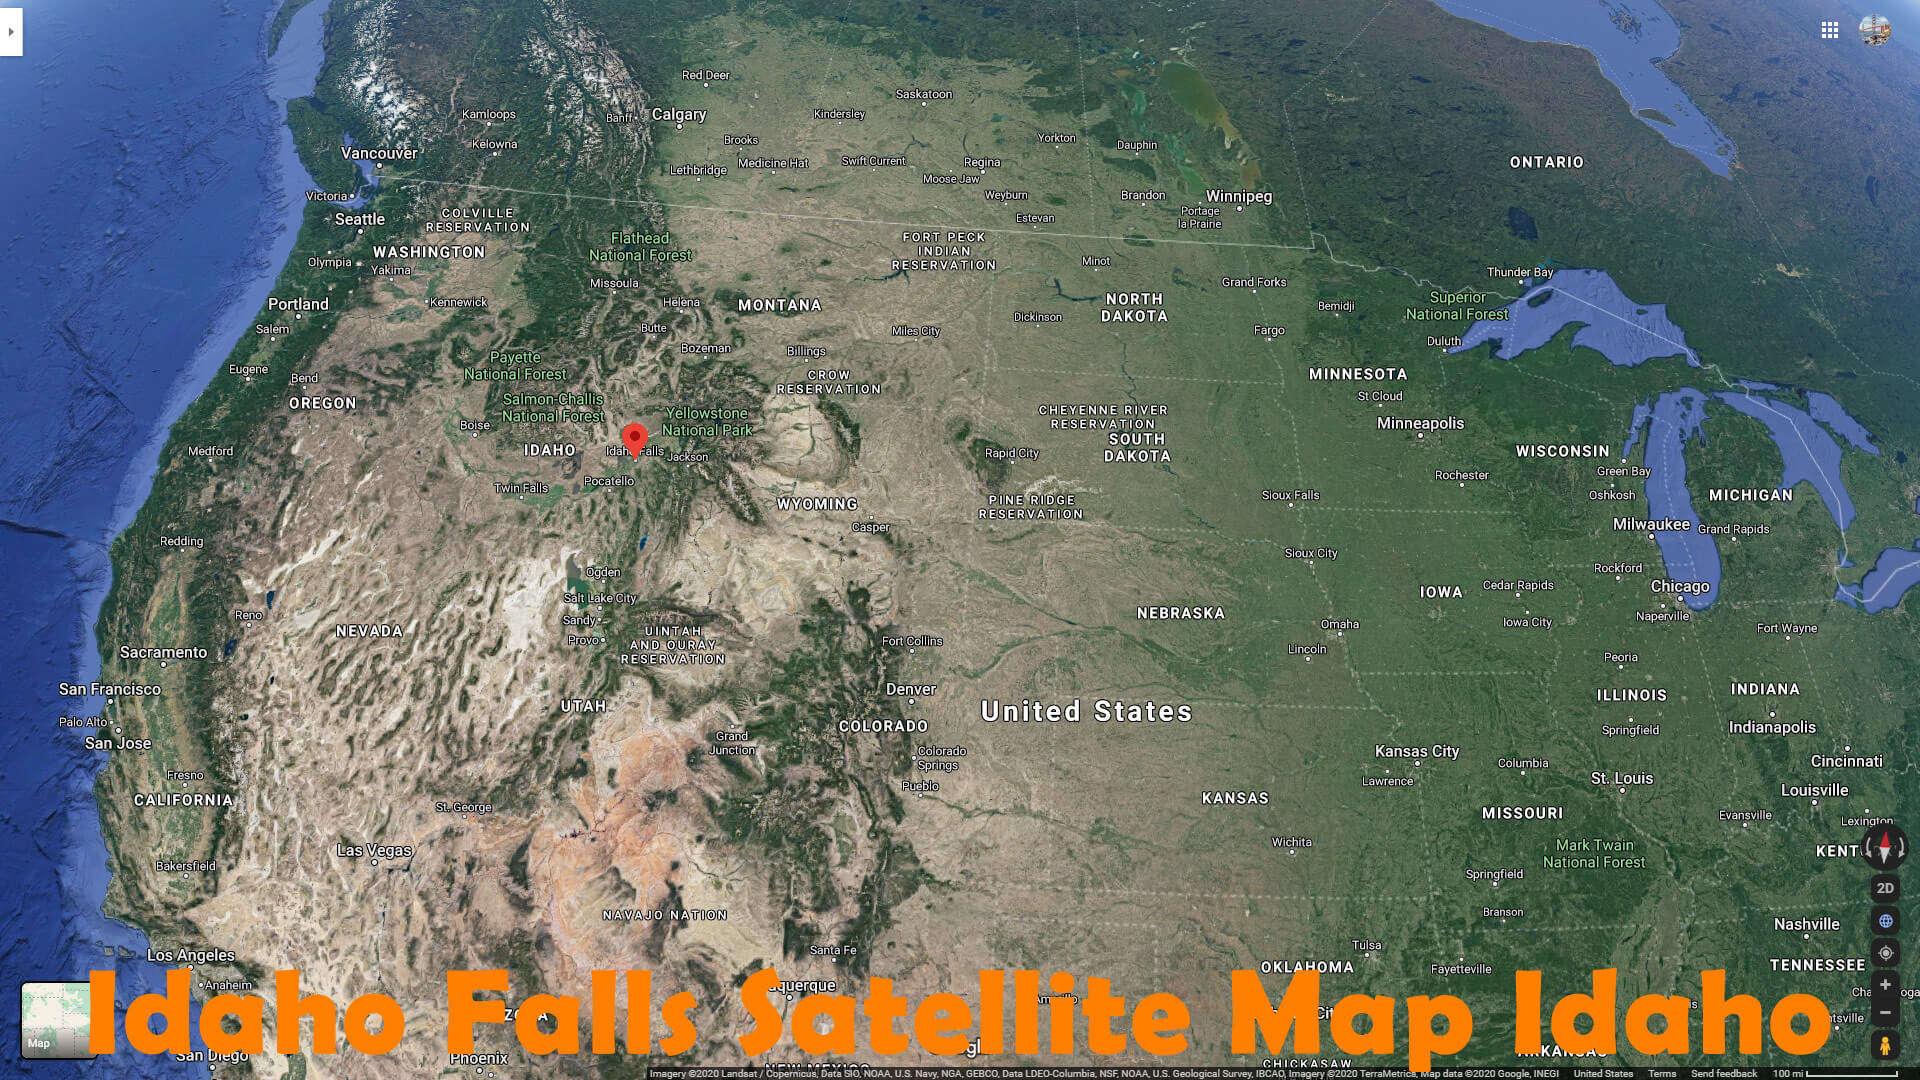 Idaho Falls Satellite Map Idaho